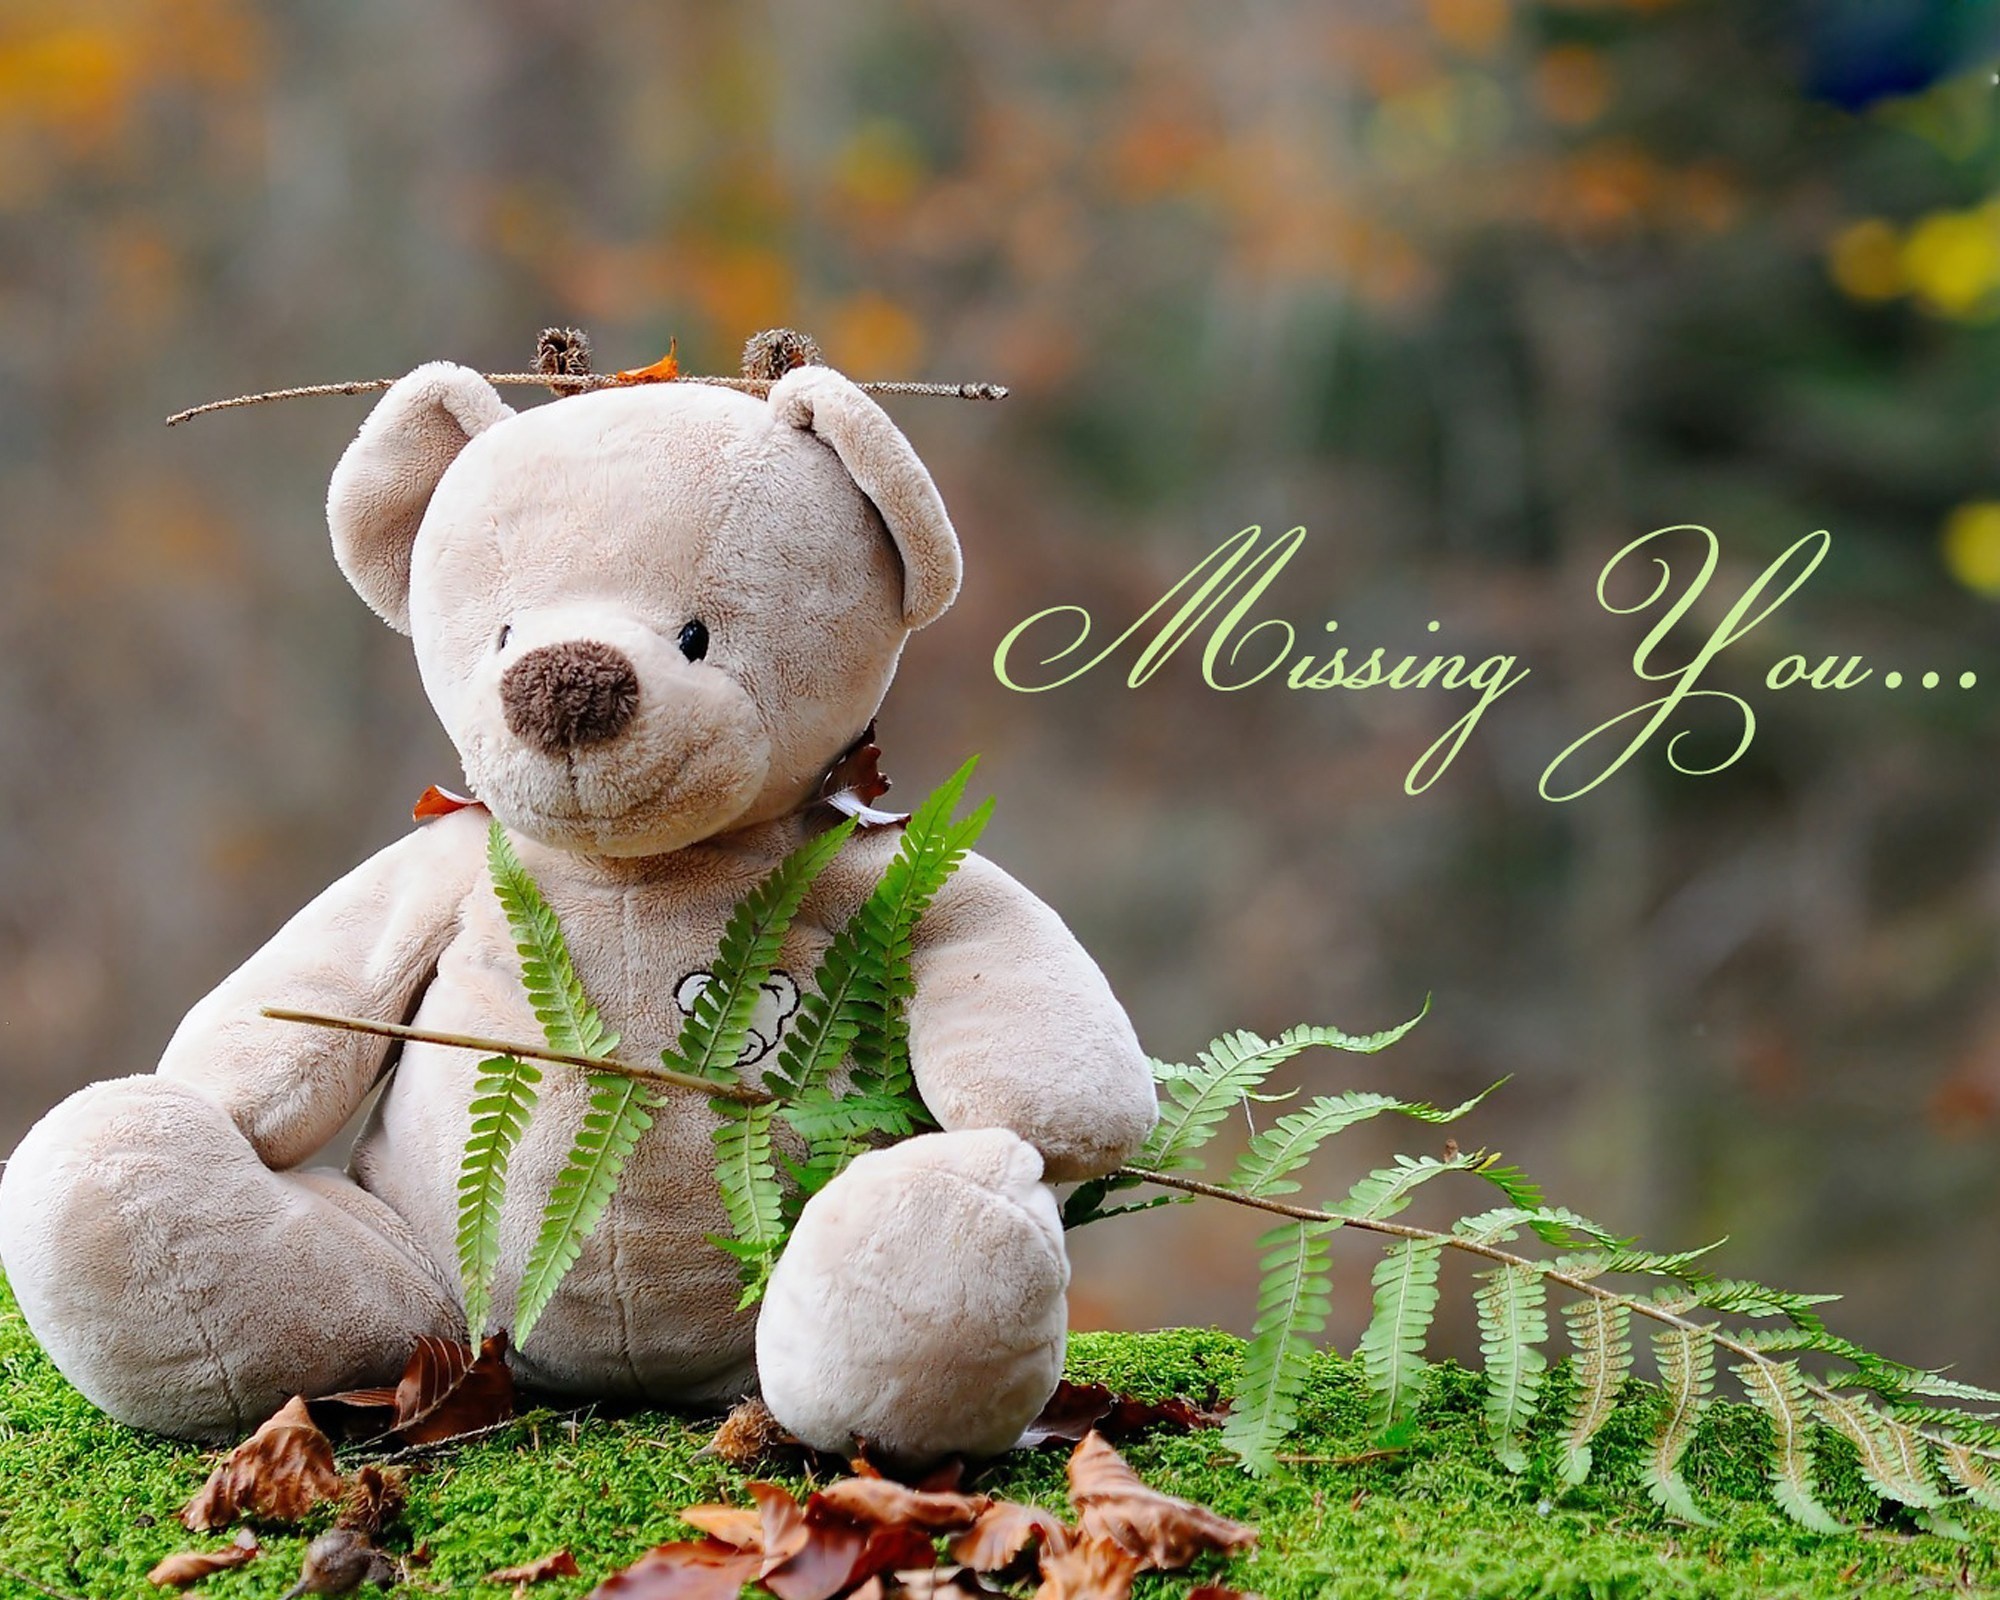 Beautiful Cute Teddy Bear Hd Wallpapers For Desktop - Beautiful Day Good Morning Image 2018 - HD Wallpaper 